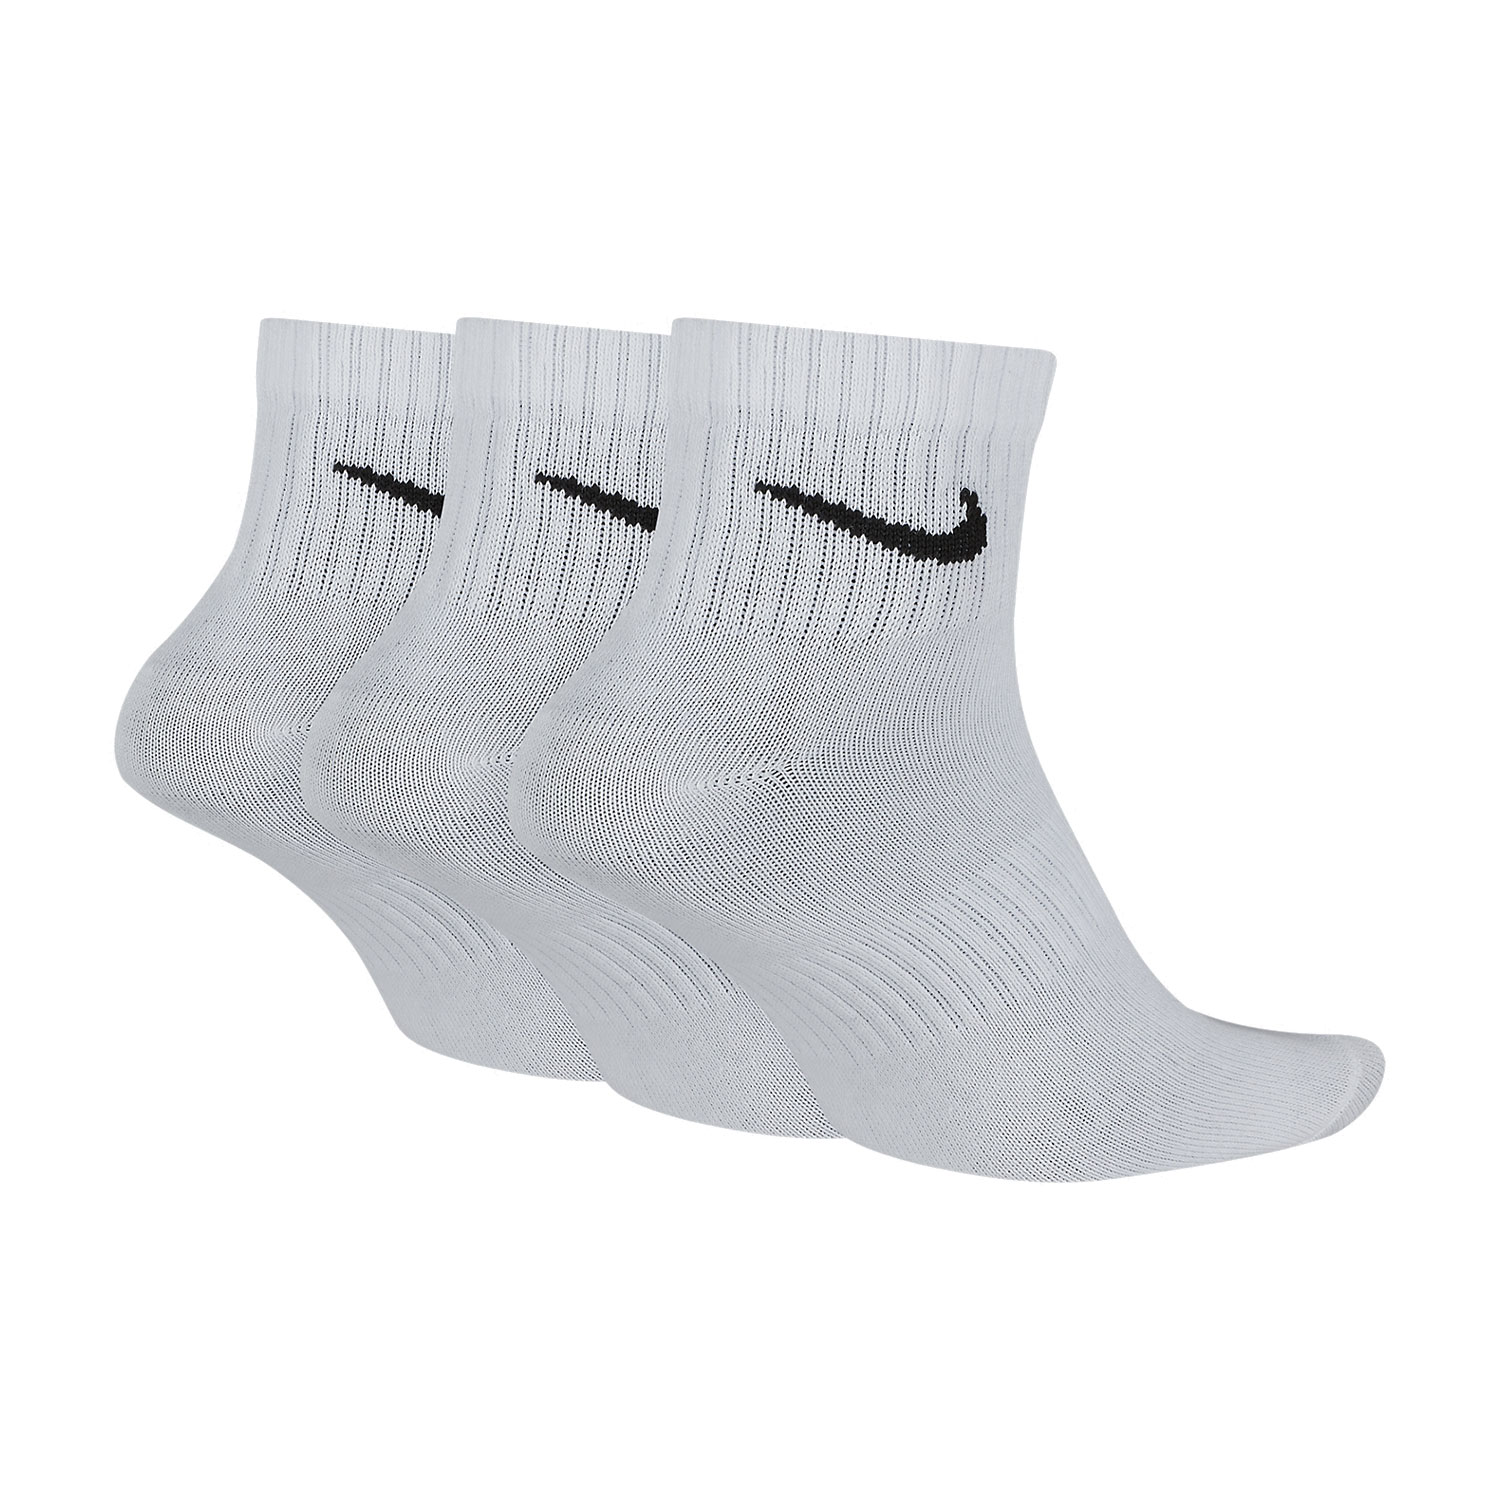 Nike Everyday Light Weight x 3 Socks - White/Black